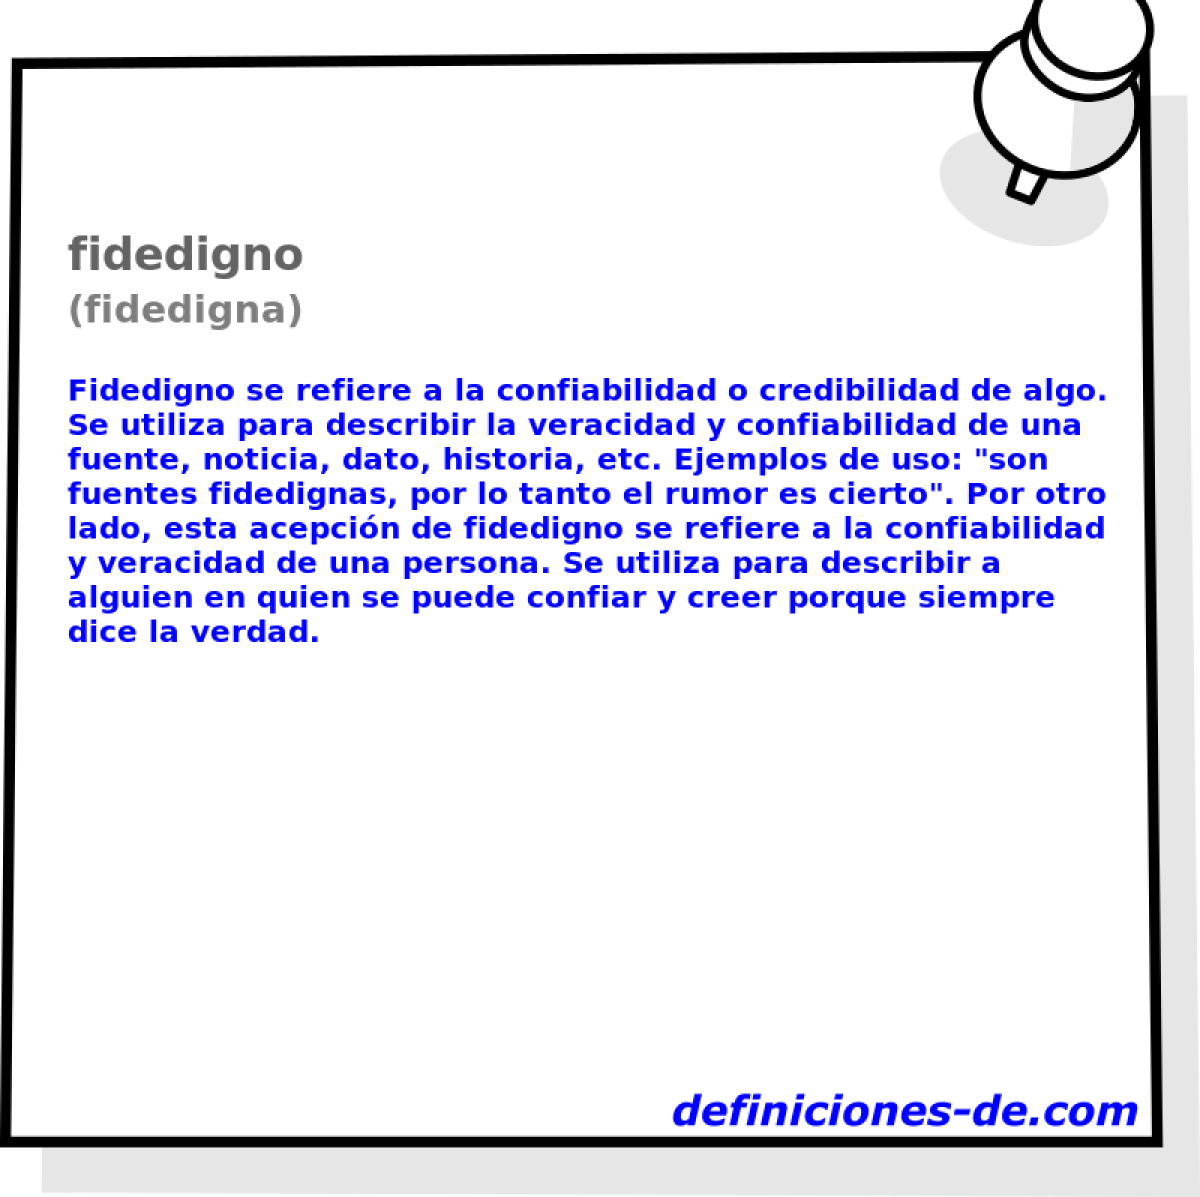 fidedigno (fidedigna)